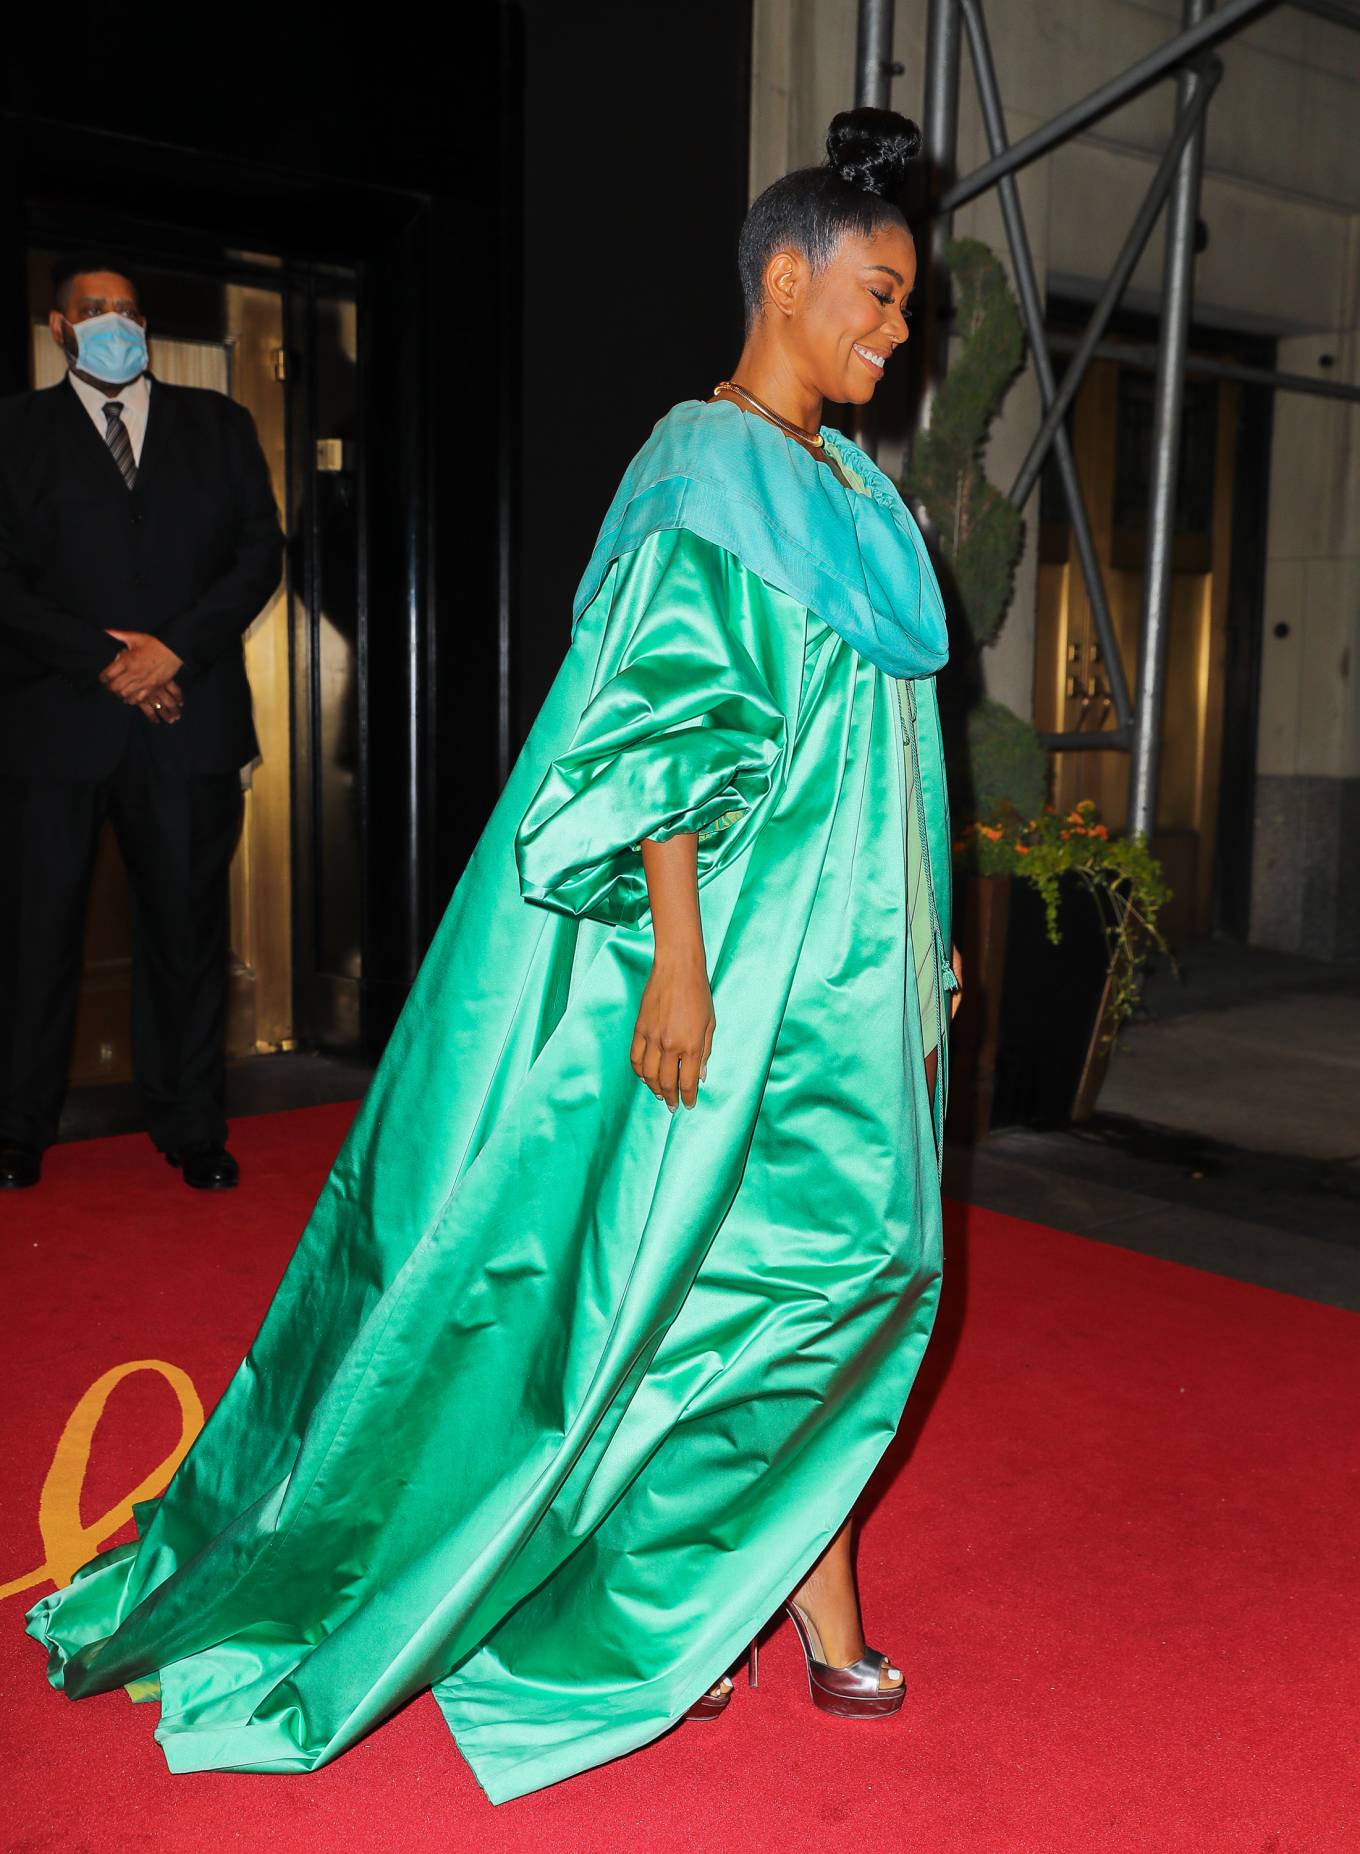 Gabrielle Union – Seen in a green dress in New